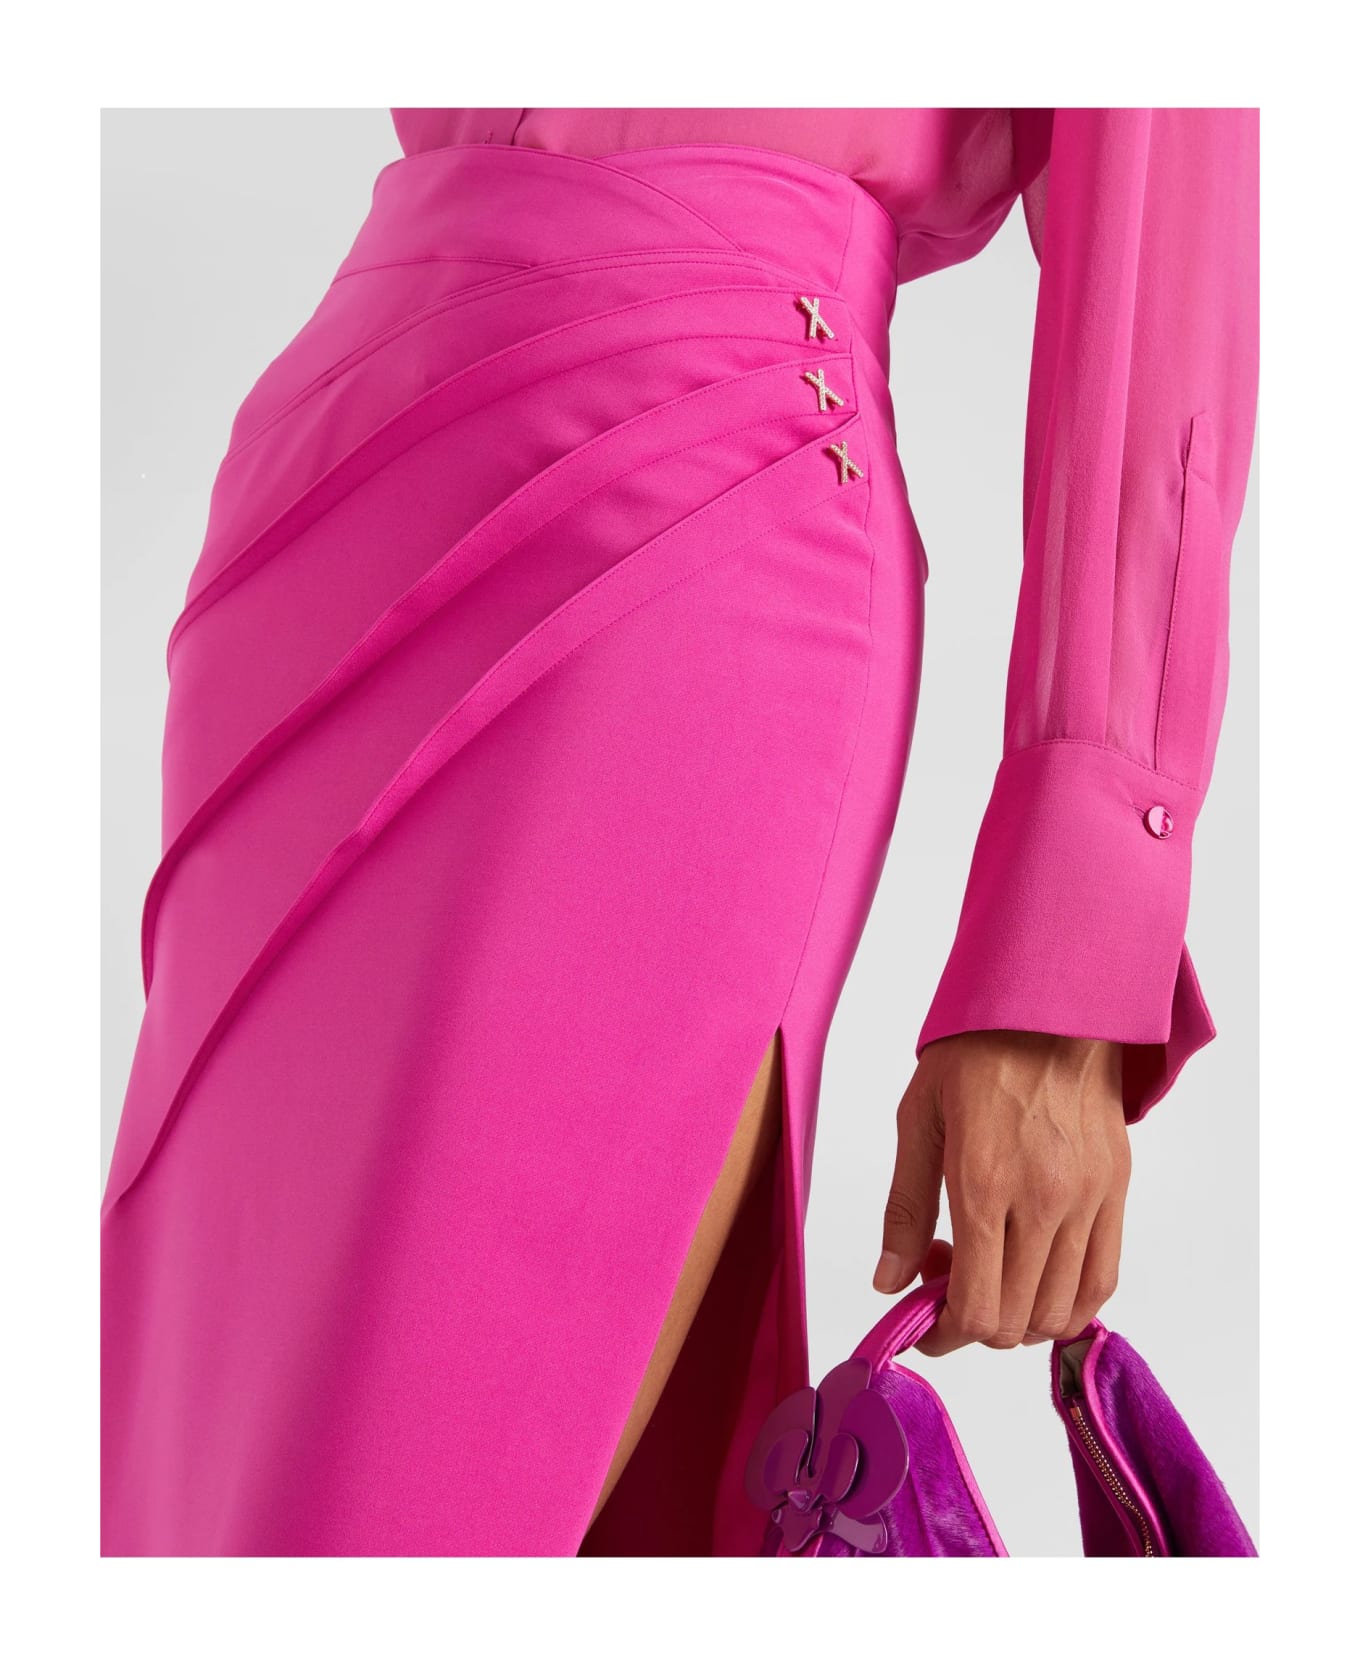 Genny Skirts Pink スカート